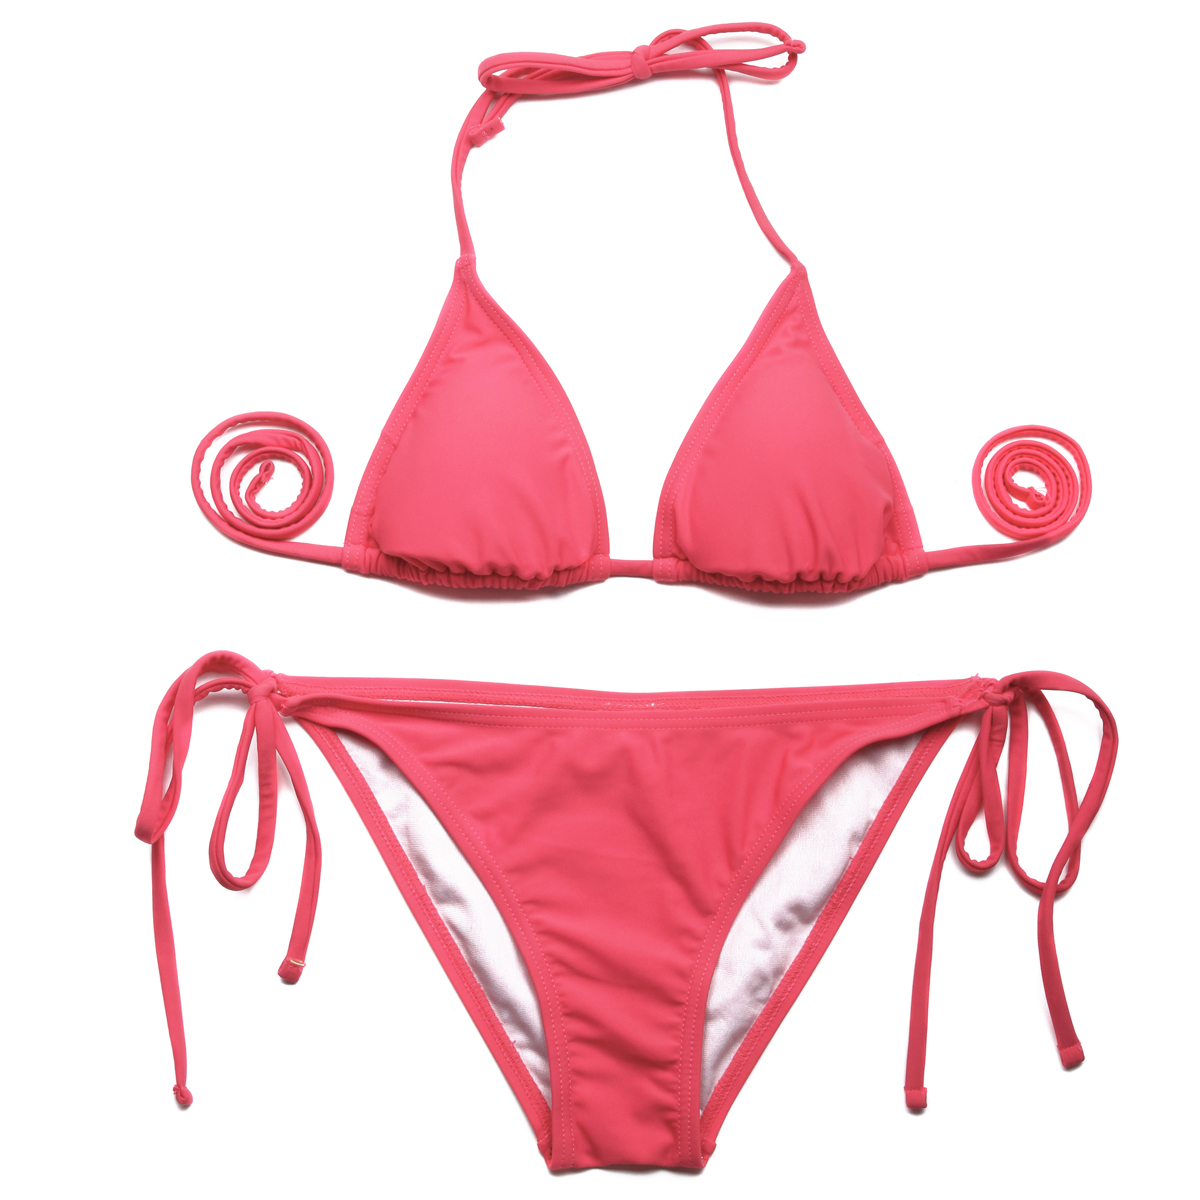 Push Up Bikini Watermelon Red Triangle Top With Classic Cut Bottom Bikini Set 2015